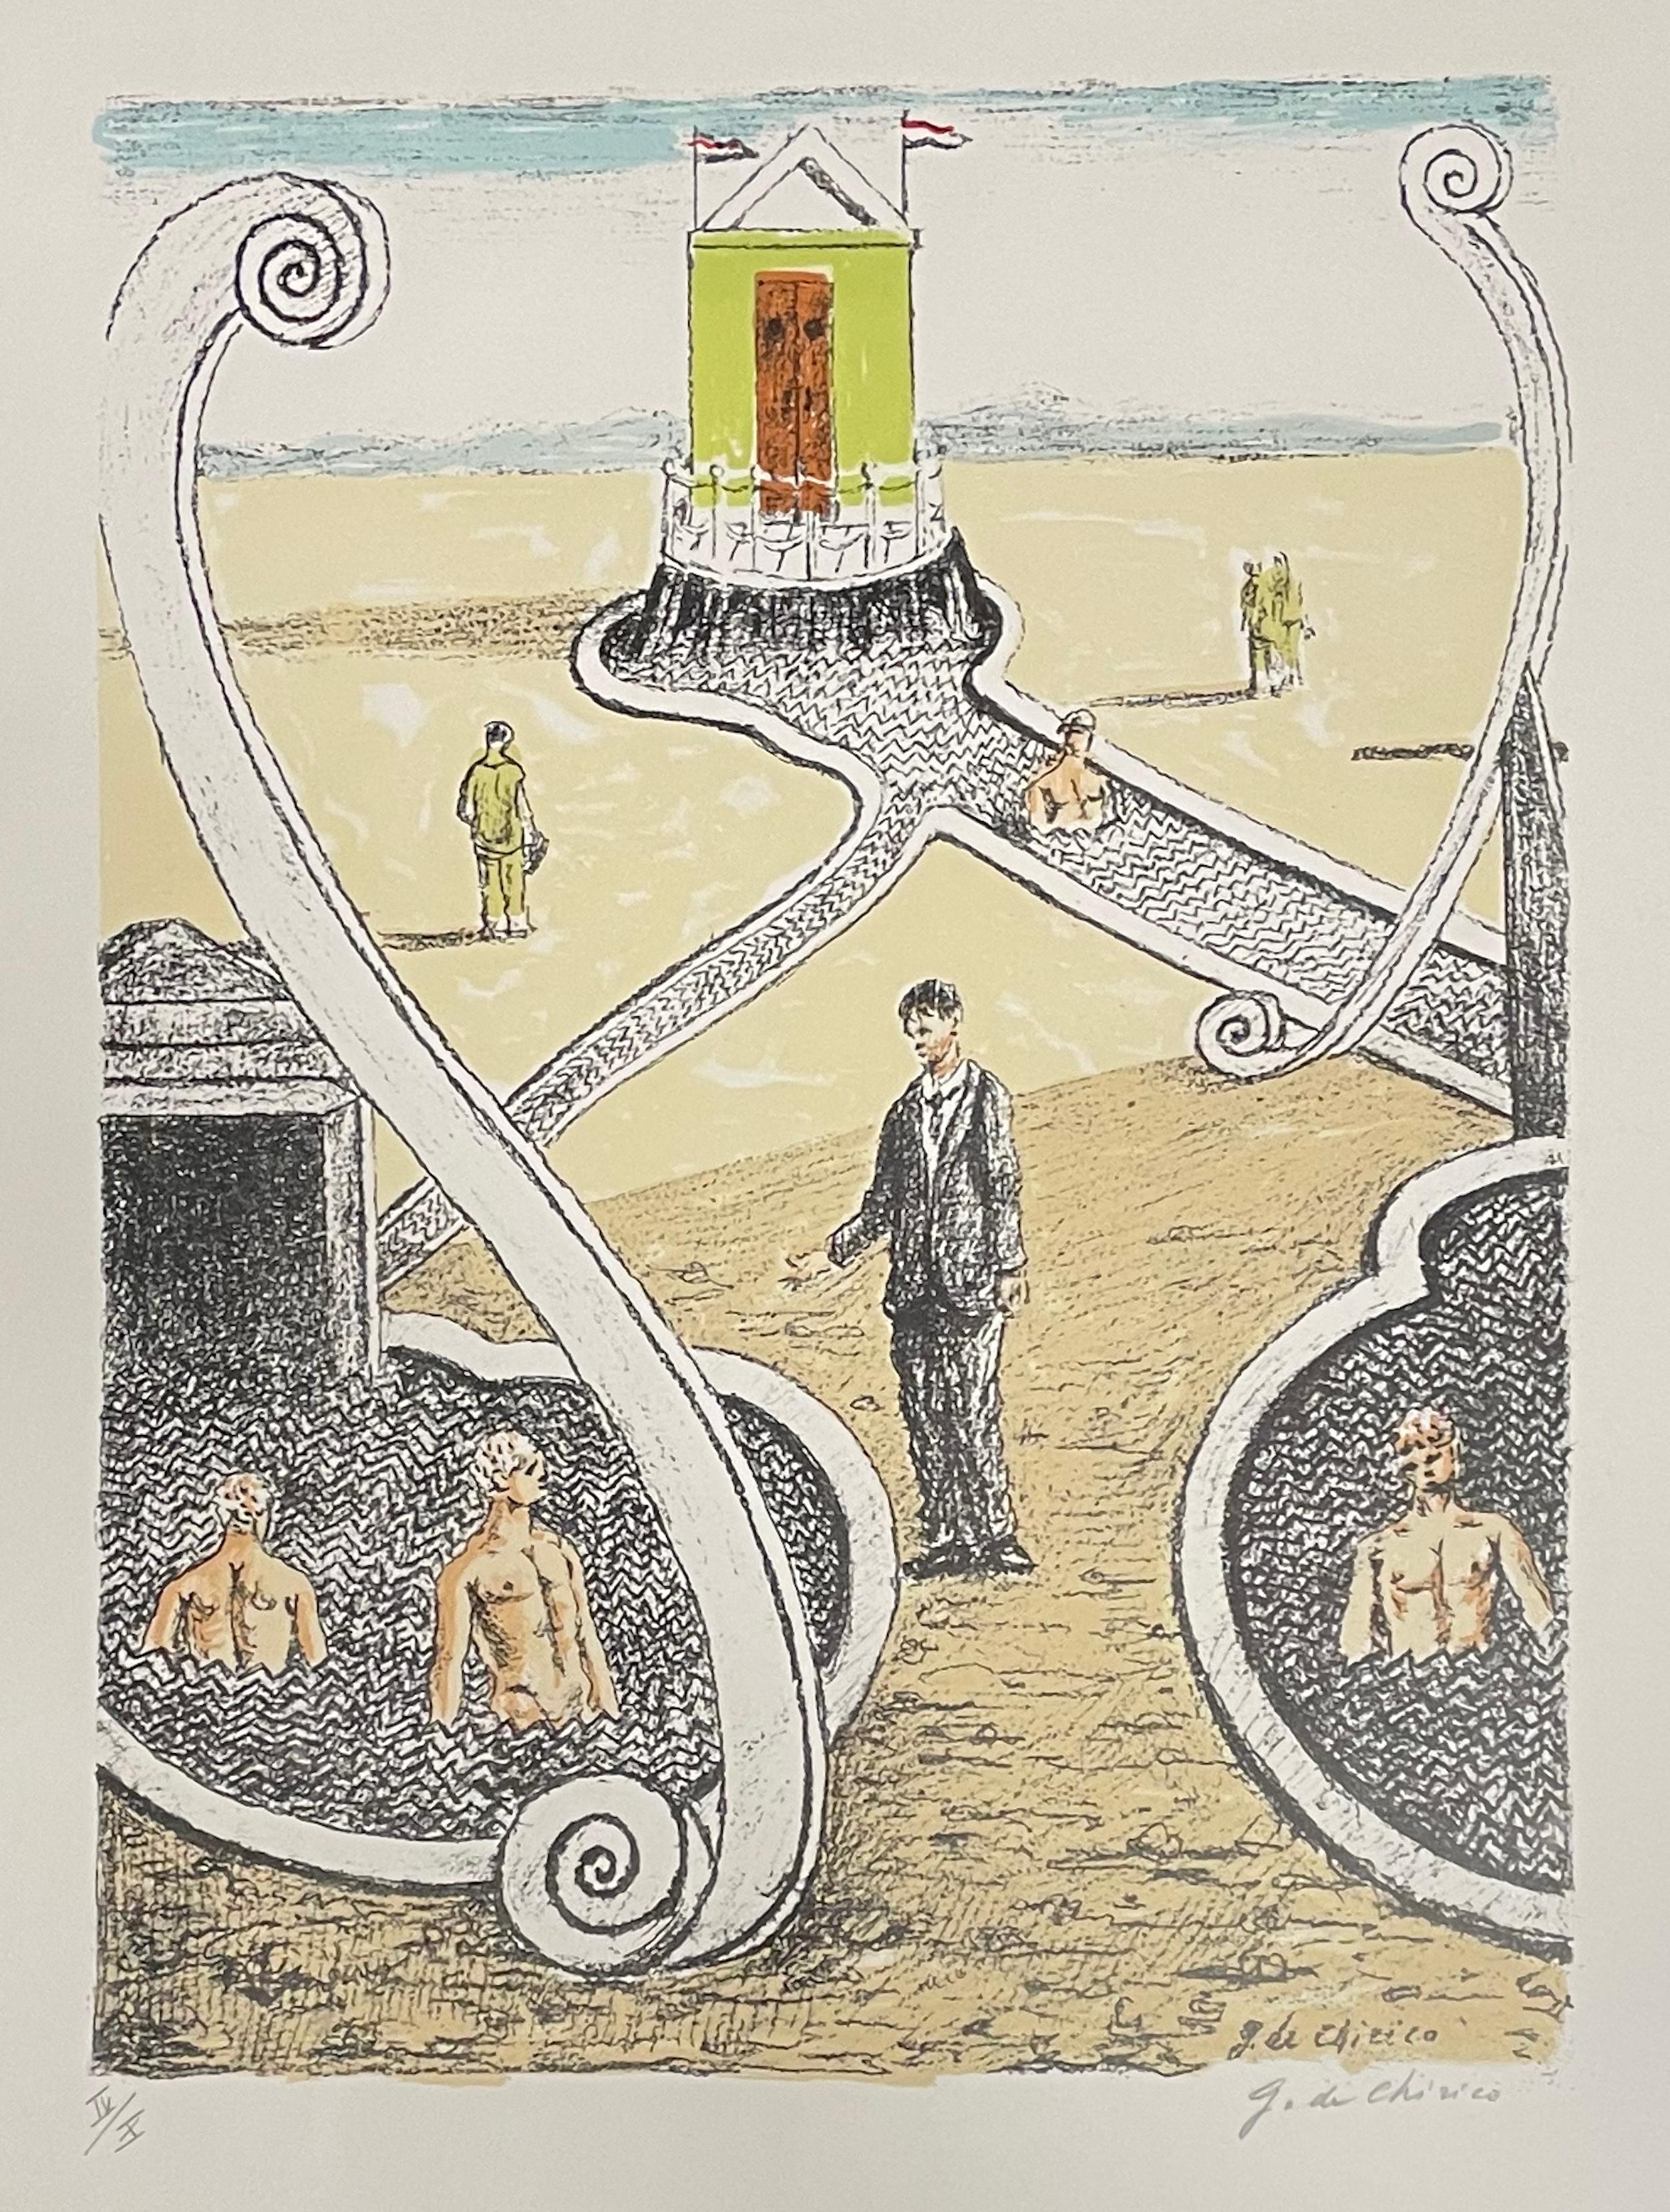 L'Ospite dei Bagnanti Misteriosi - Lithographie de G. De Chirico - 1969